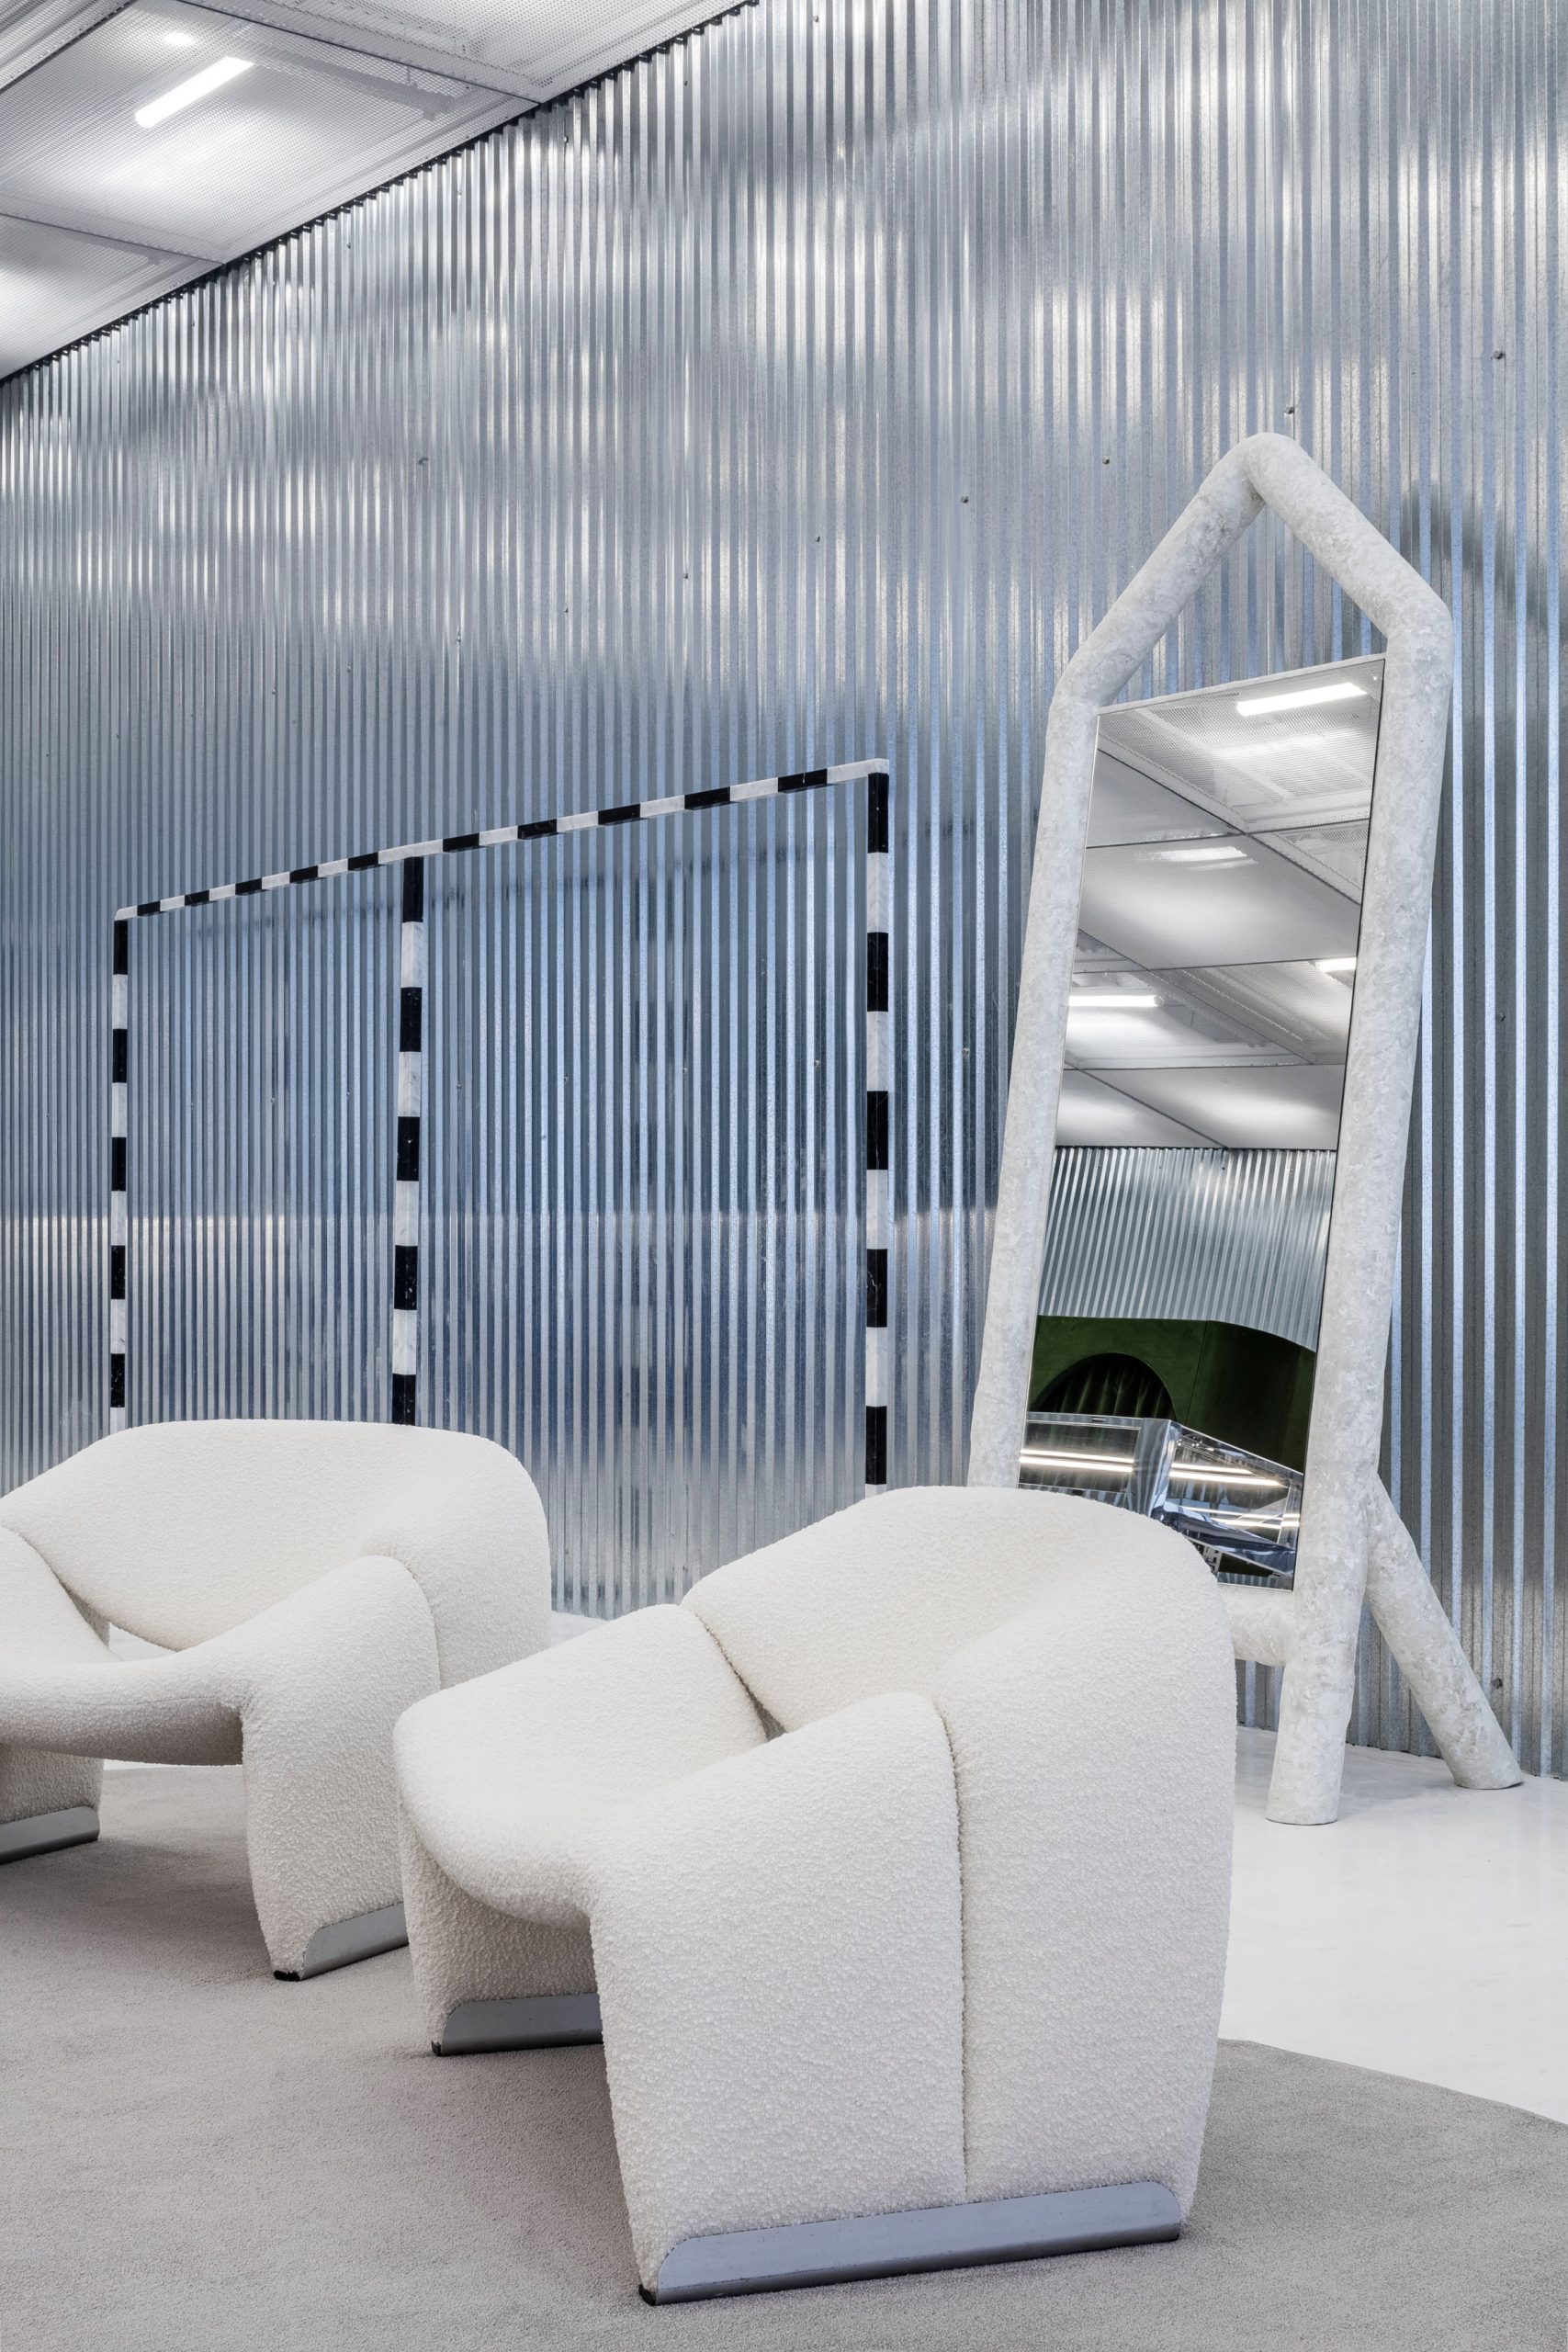 Virgil Abloh on Off-White's latest interior designs